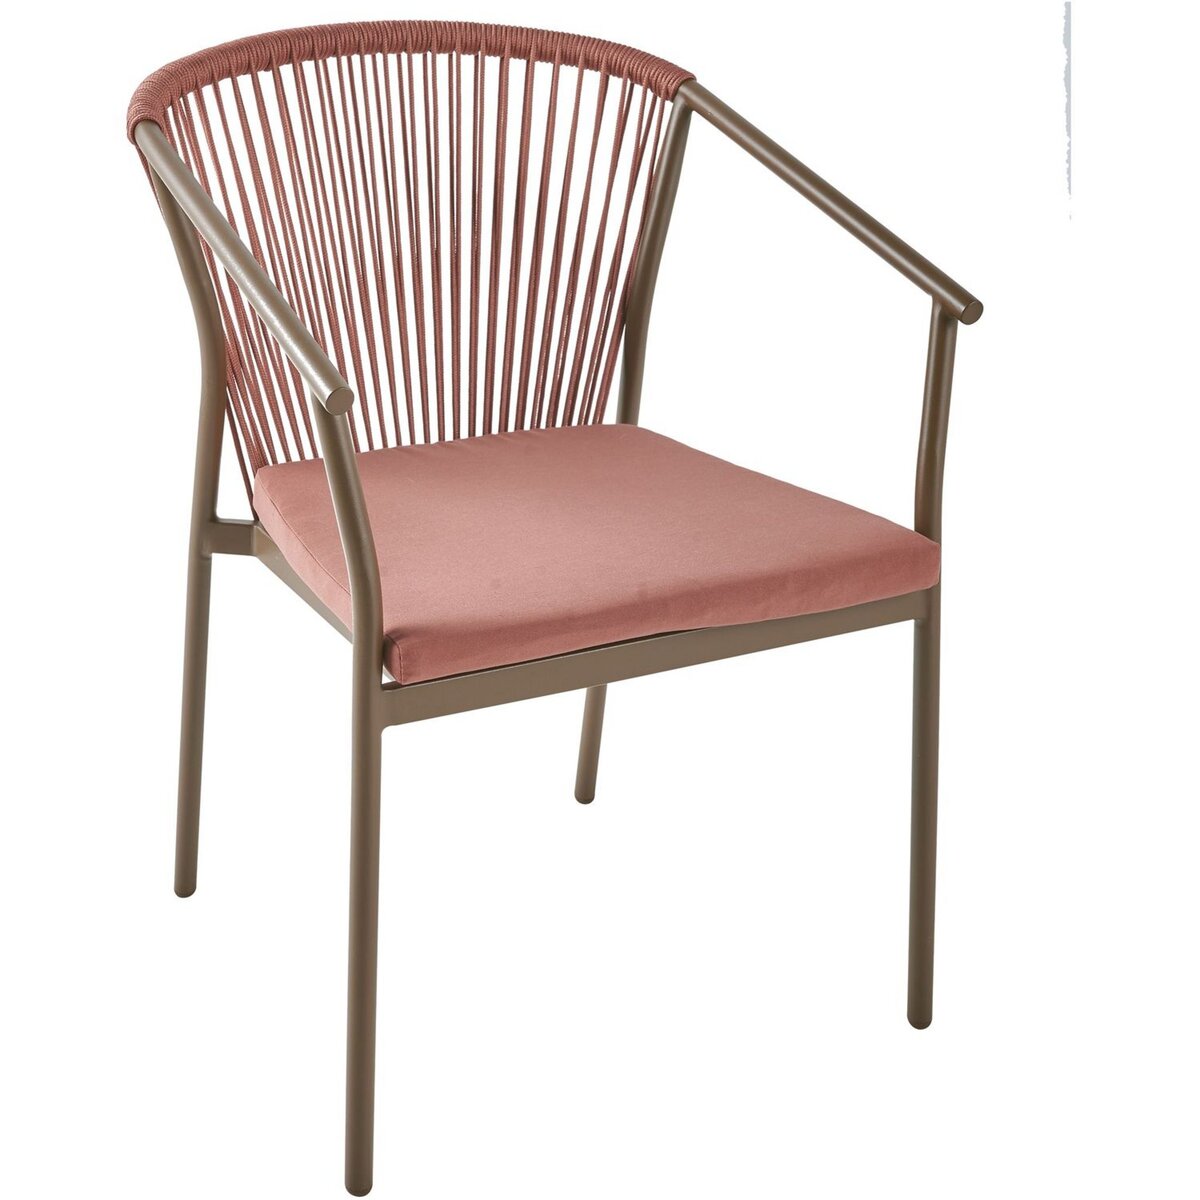 GARDENSTAR Chaise de jardin - Acier et corde - Tanin